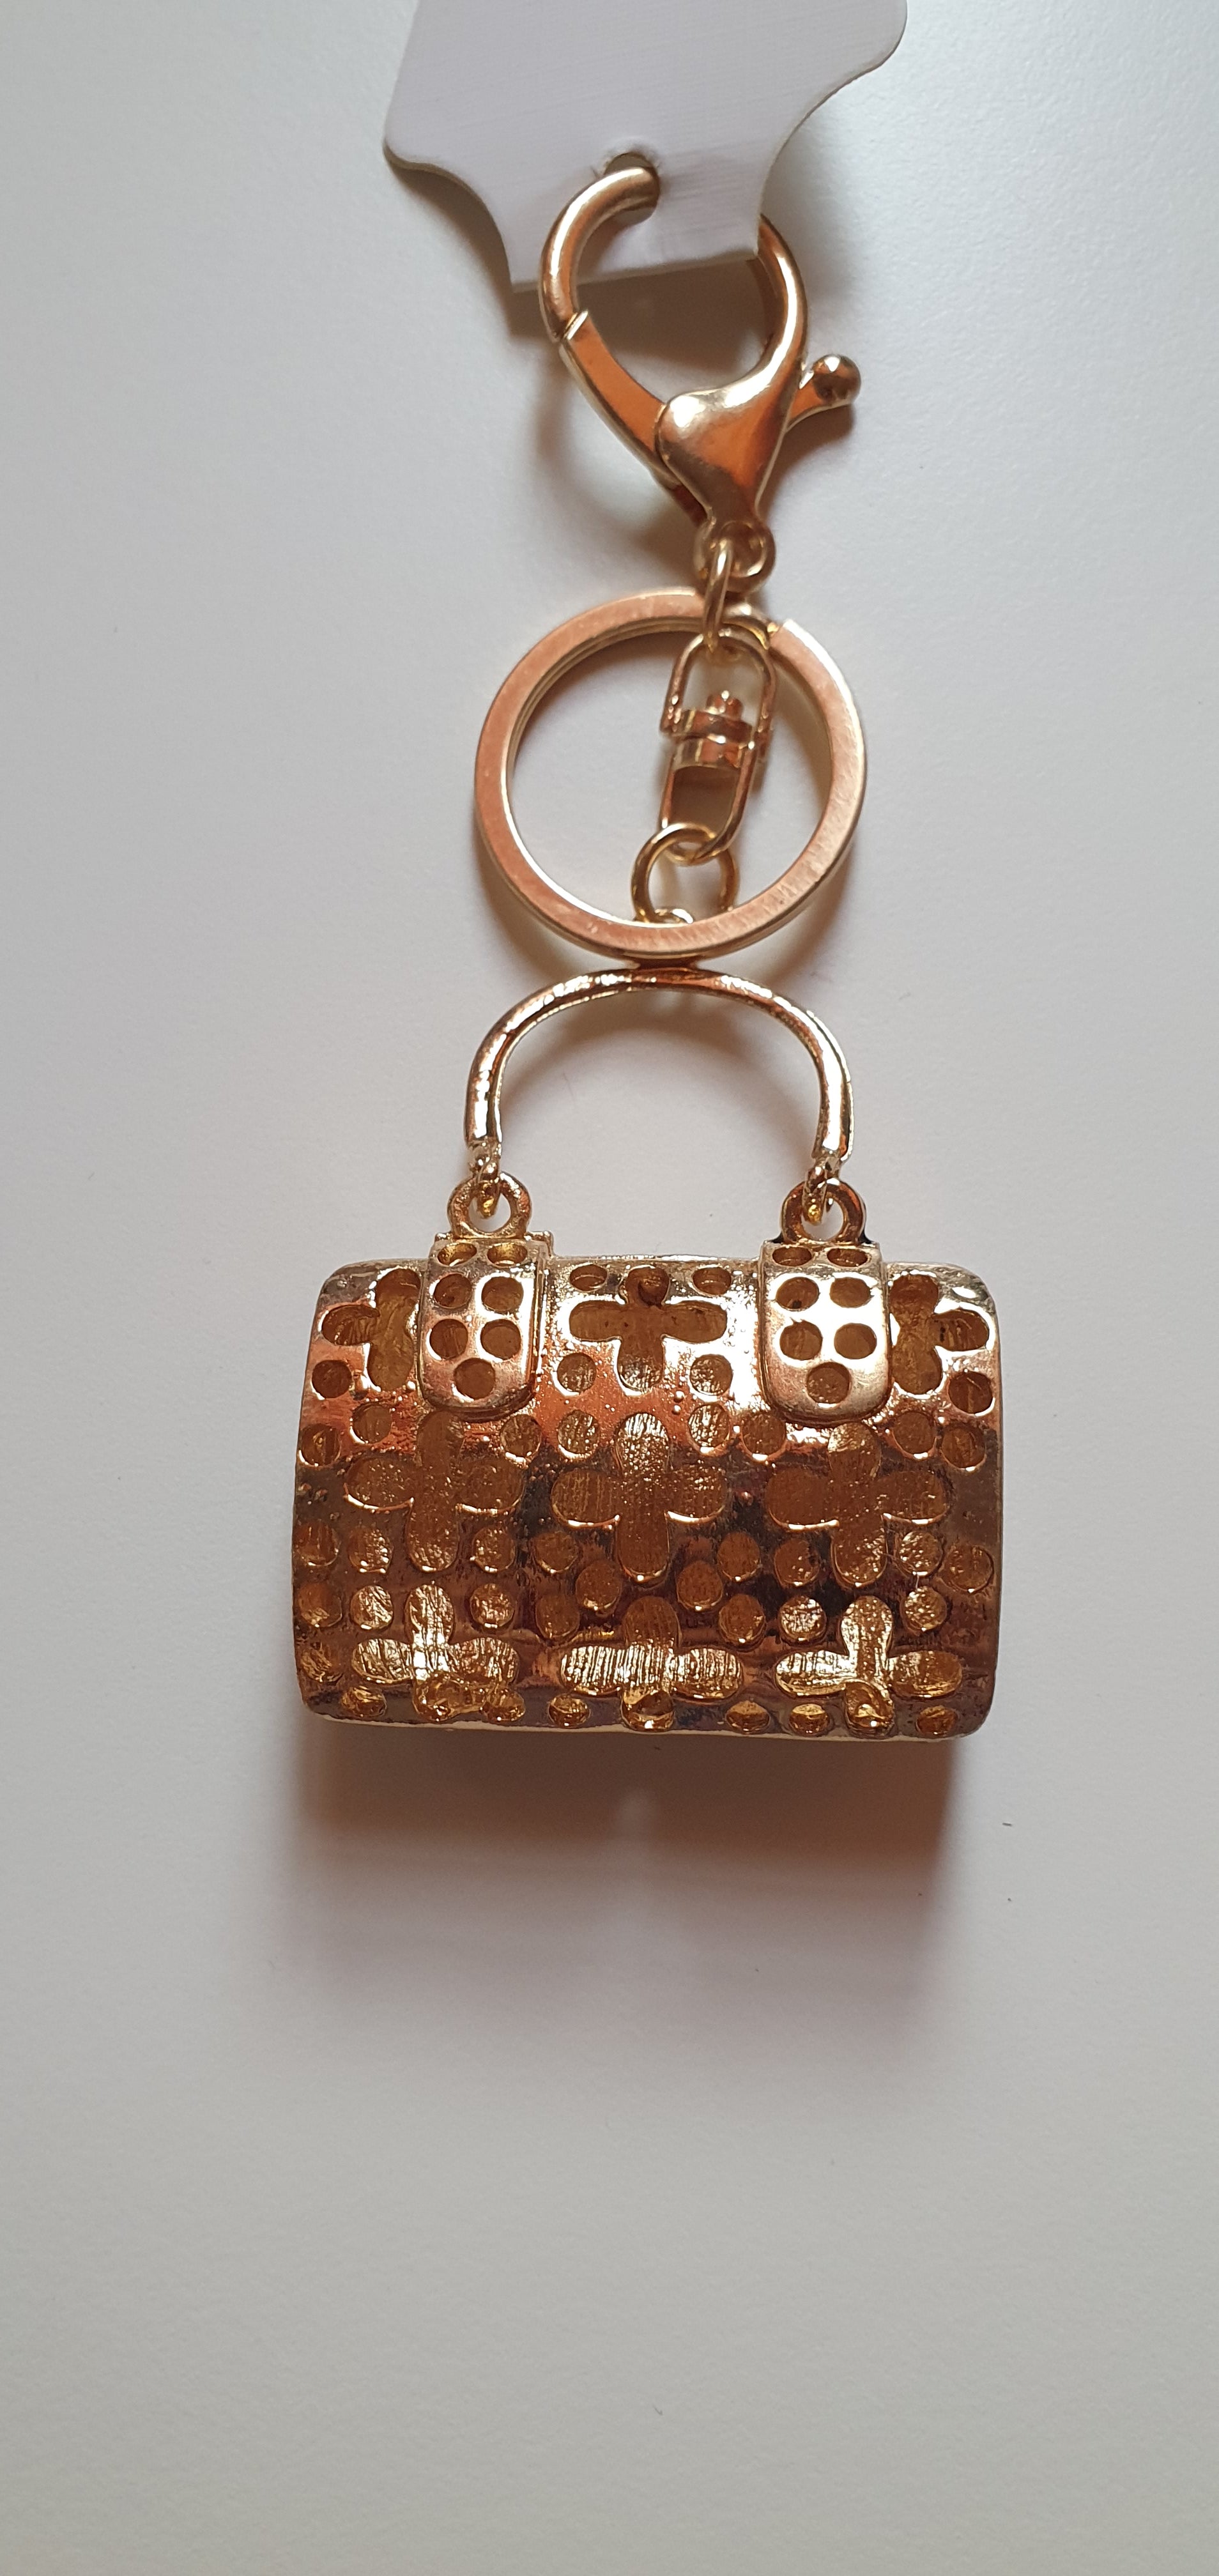 Rhinestone Bag charm and key chain